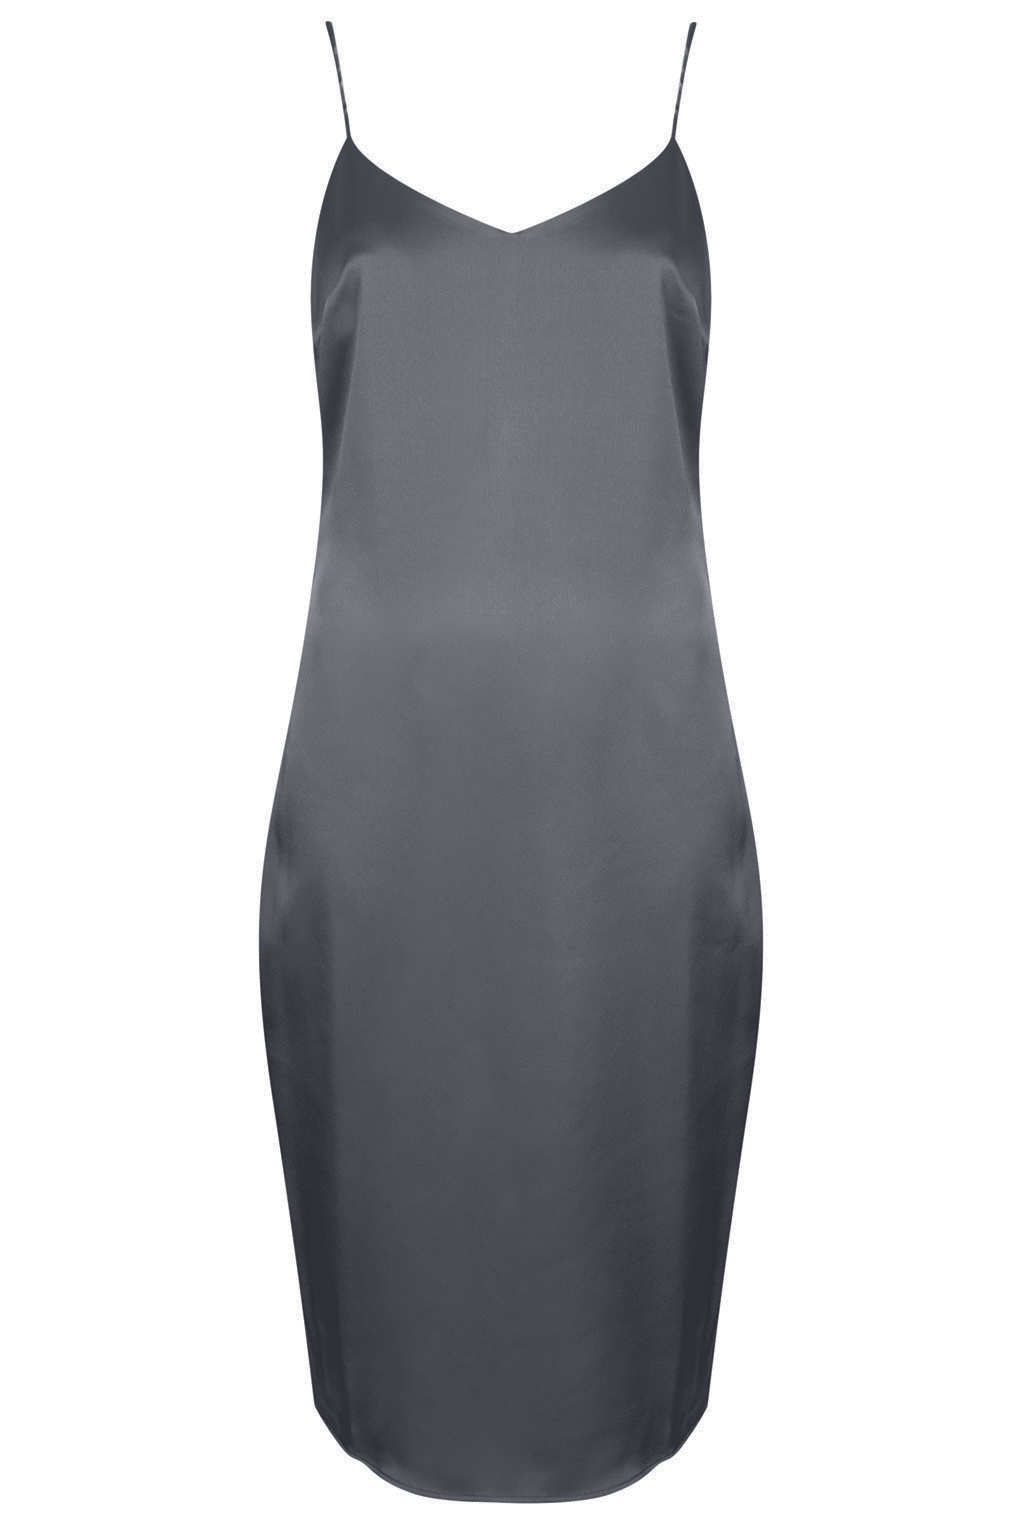 Topshop Satin Midi Slip Dress in Gray (Grey) | Lyst